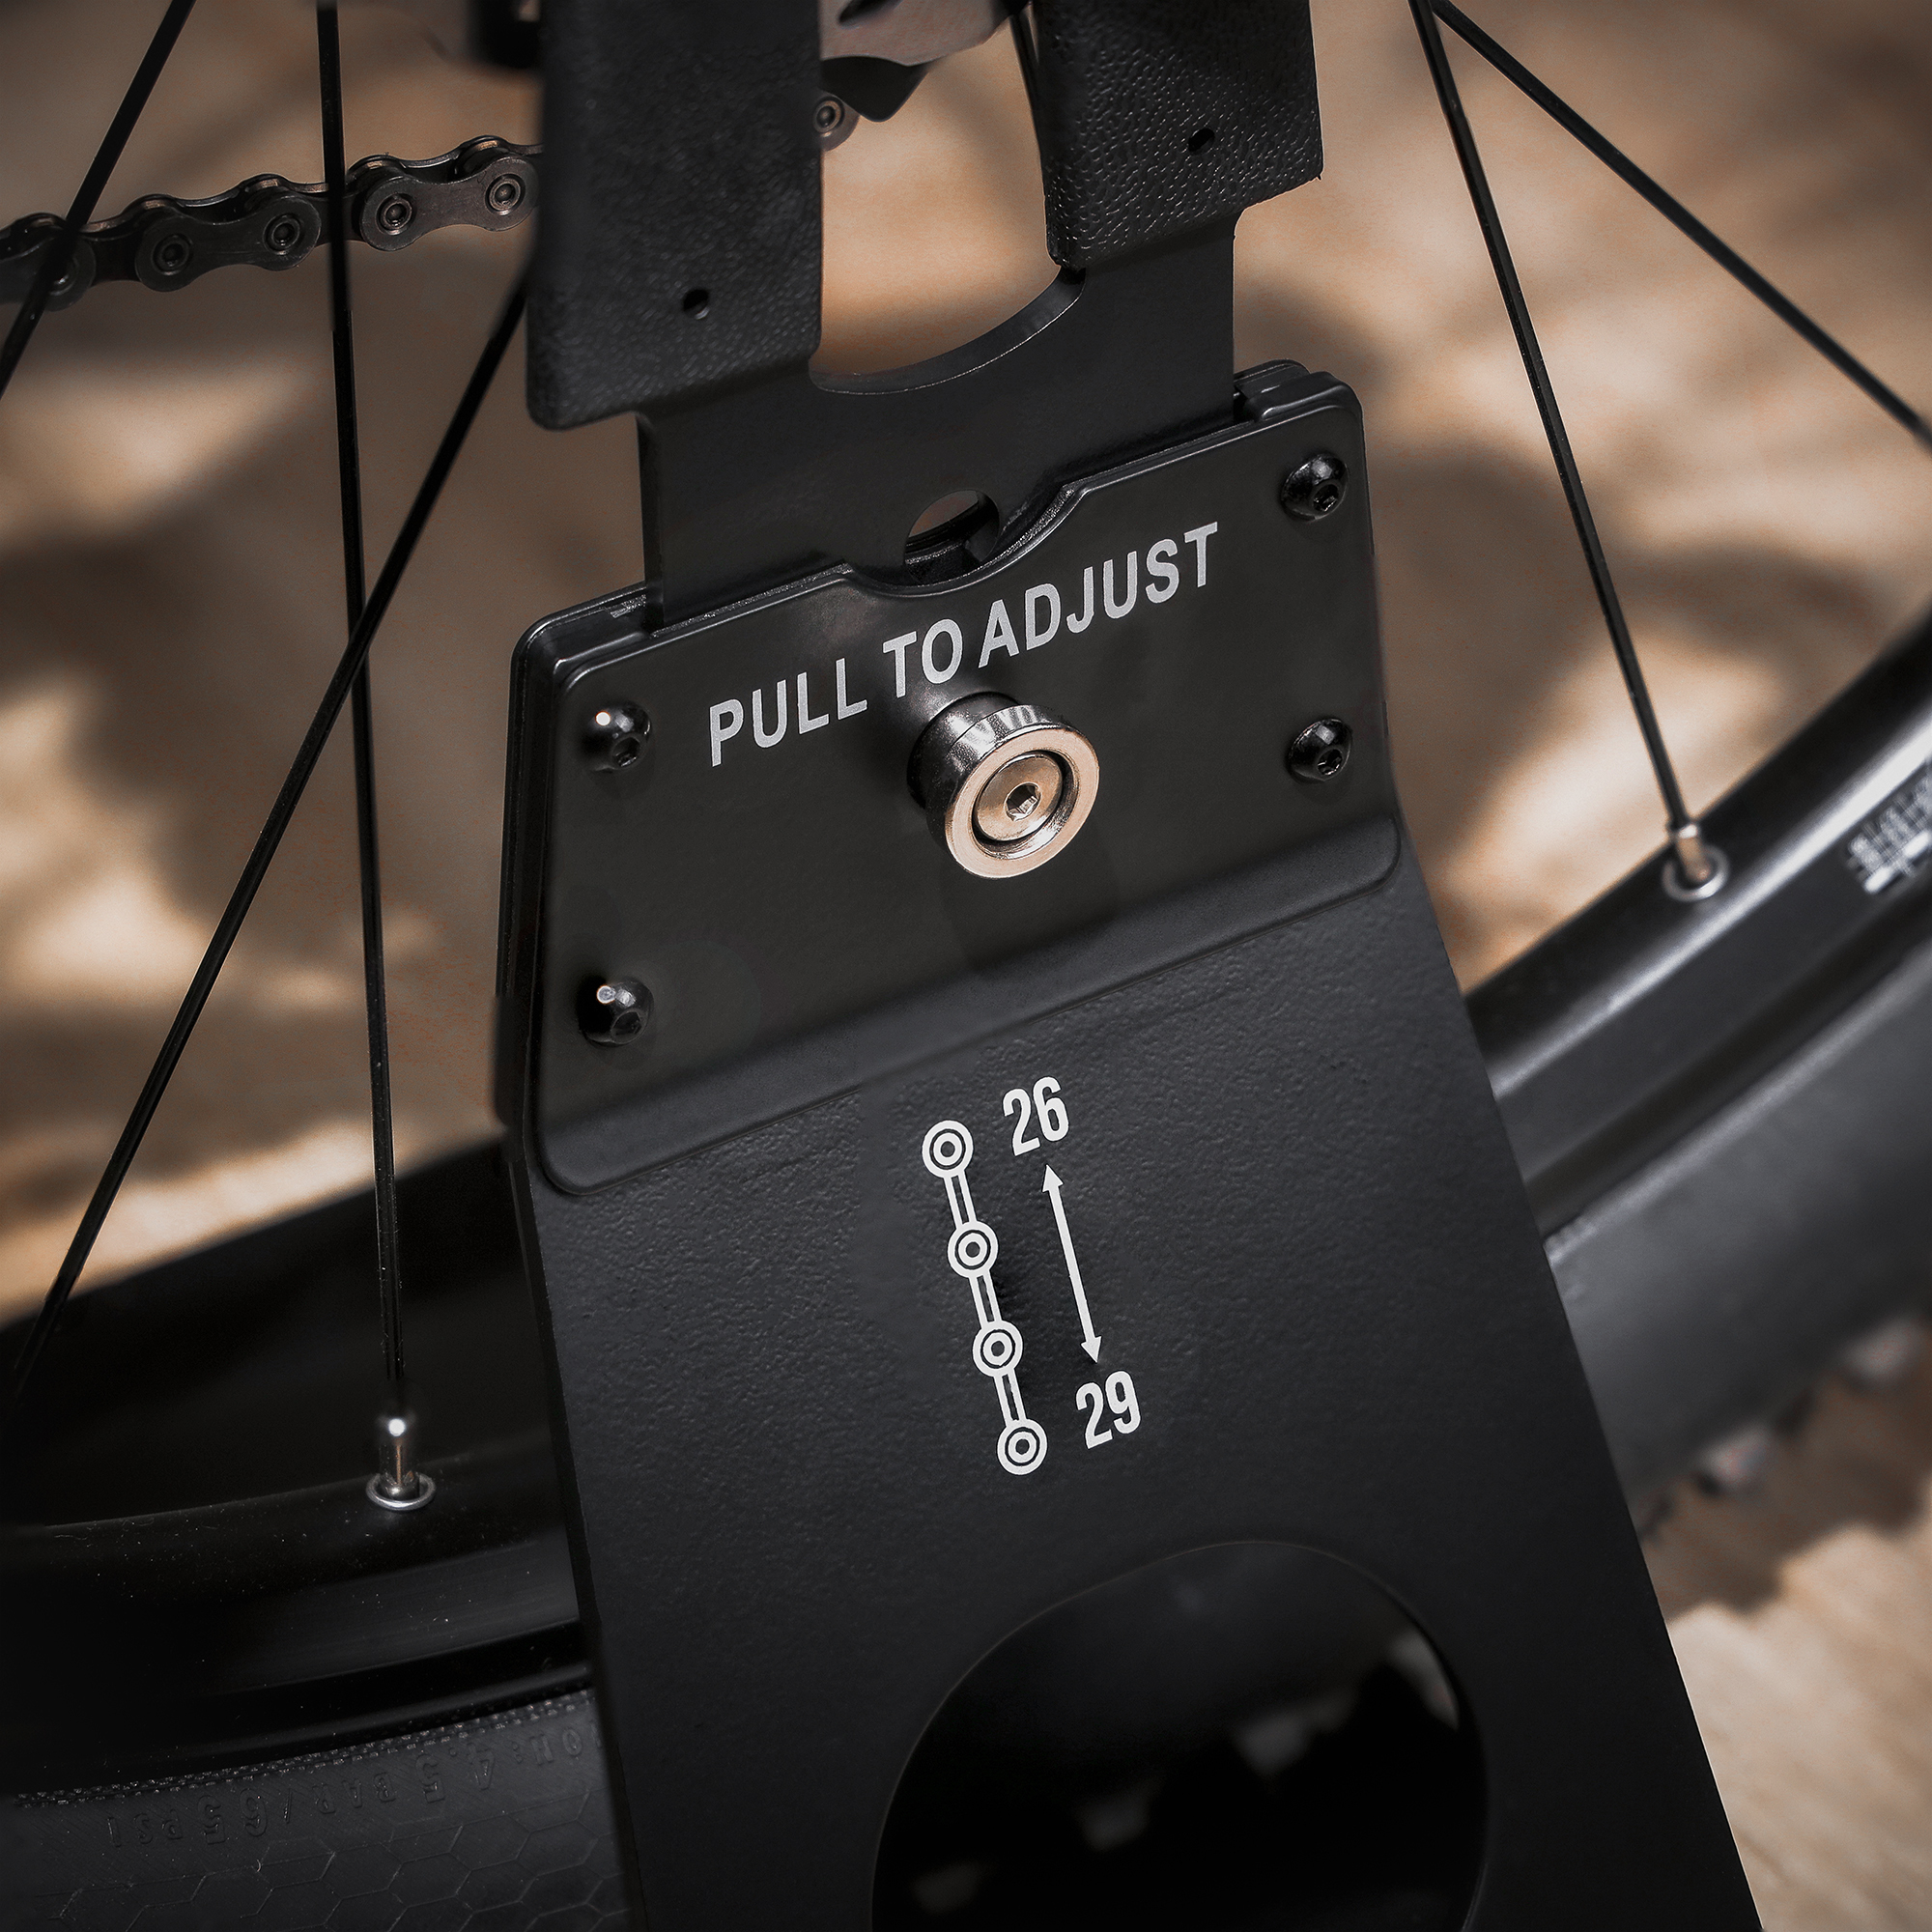 Bikehand Rear Hub Mount Bike Bicycle Stand Storage Rack Adjustable 